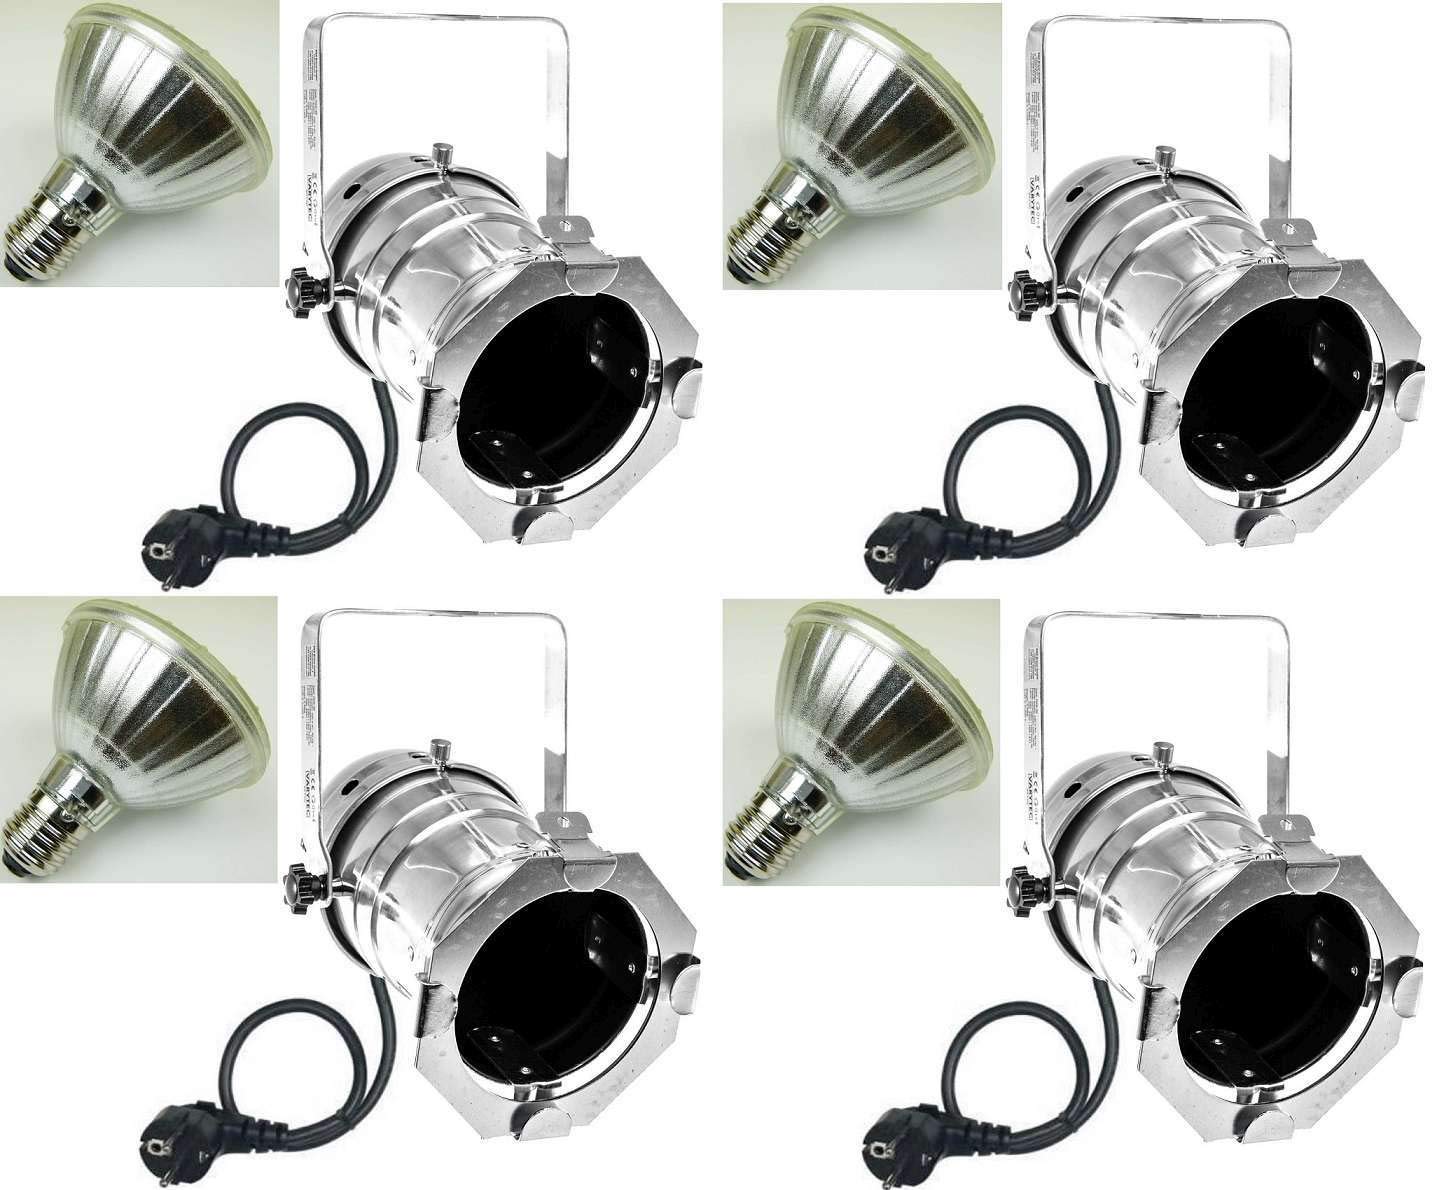 4 x PAR 30 Spot-Light Scheinwerfer SILBER polish PAR-30 incl. 11 Watt LED Leuchtmittel & Kabel mit Schuko-Stecker